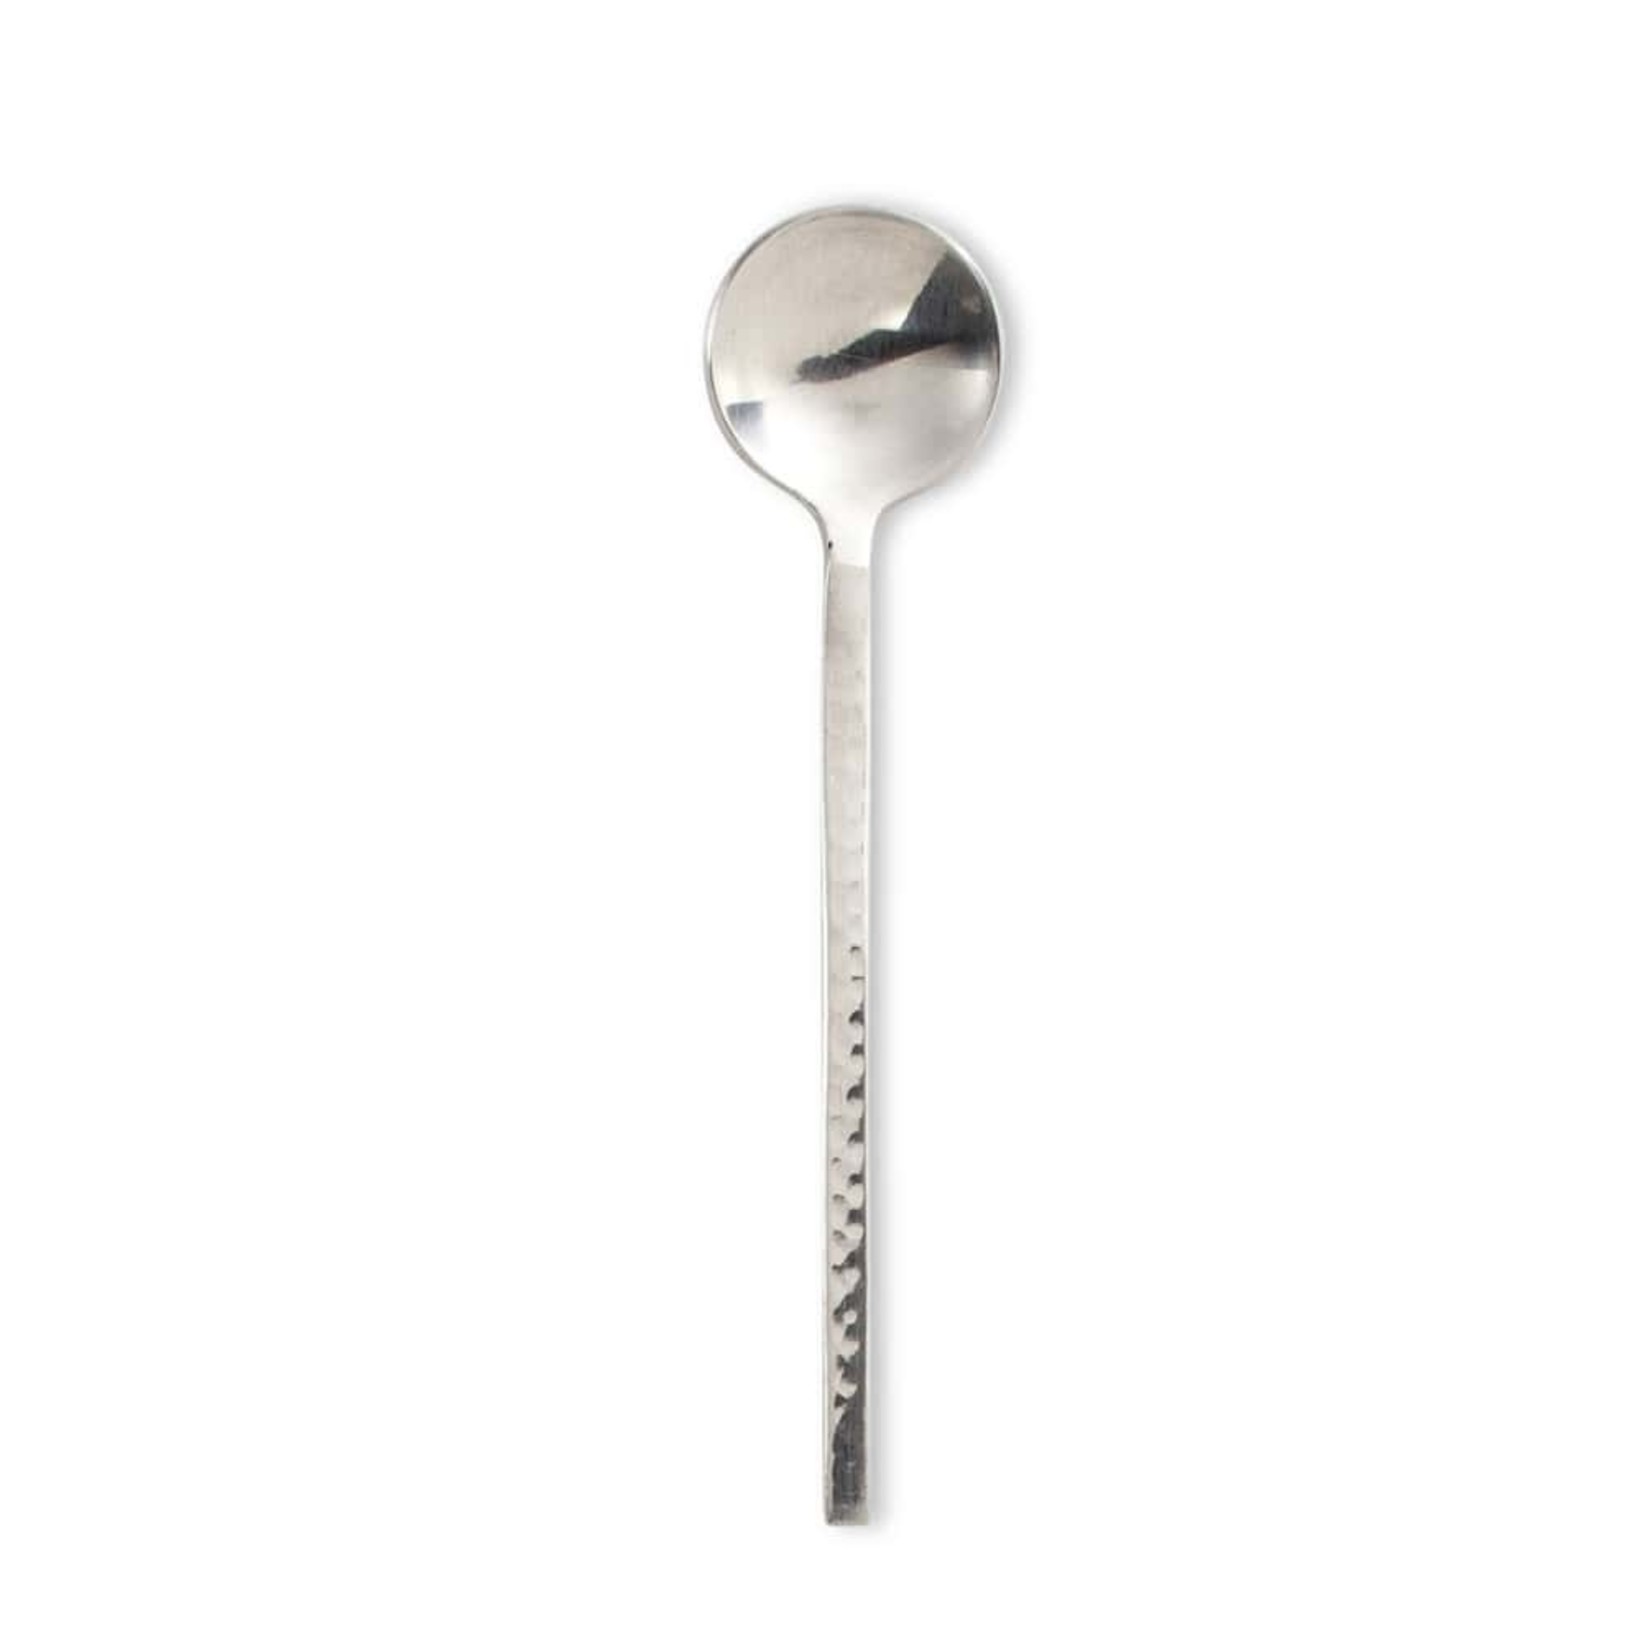 ABBOTT ABBOTT Small Shiny Hammered Spoon